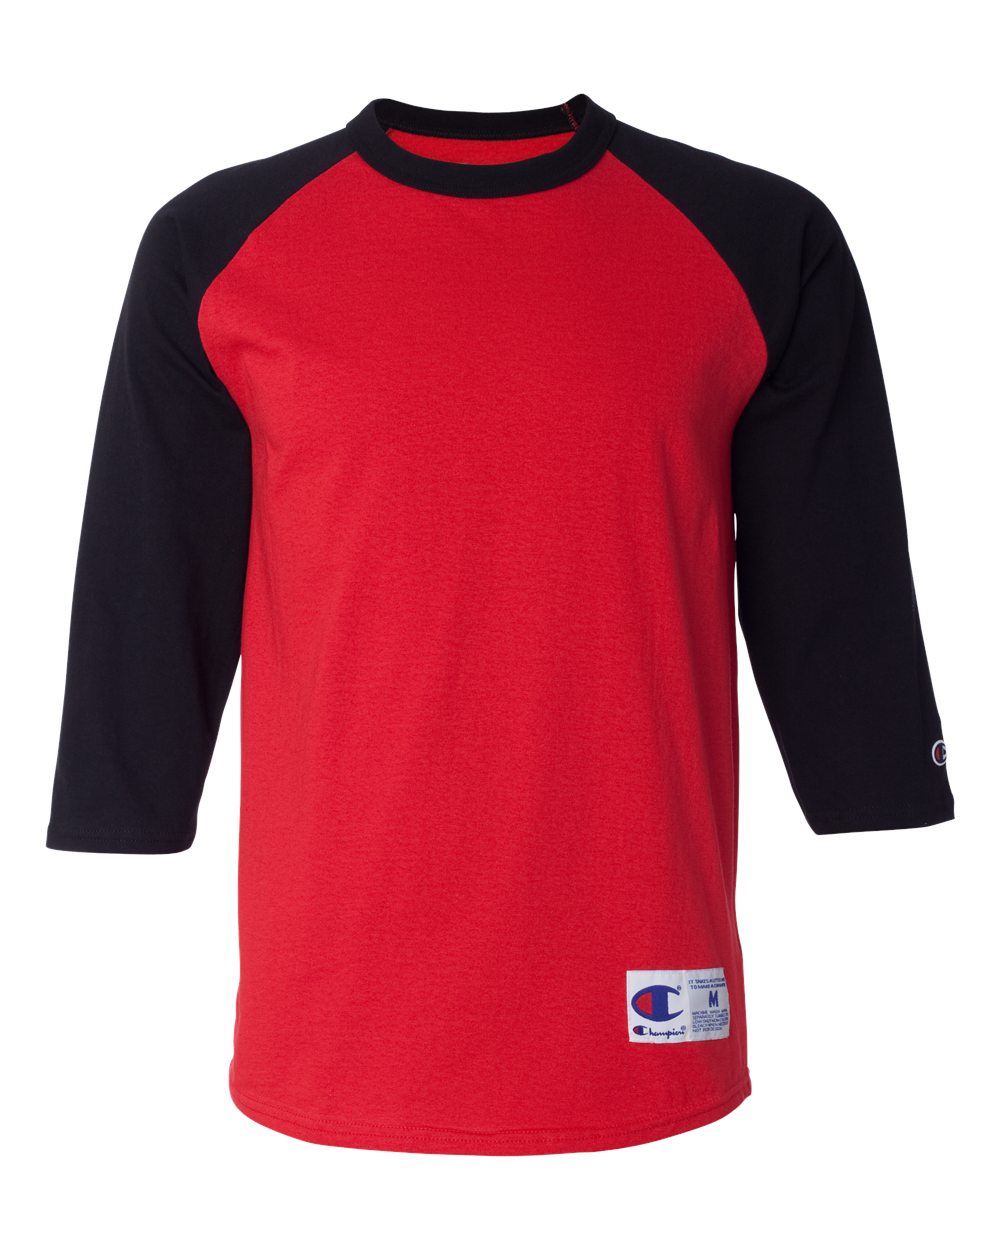 champion adult 3/4-quarter sleeve raglan baseball tee scarlet red black